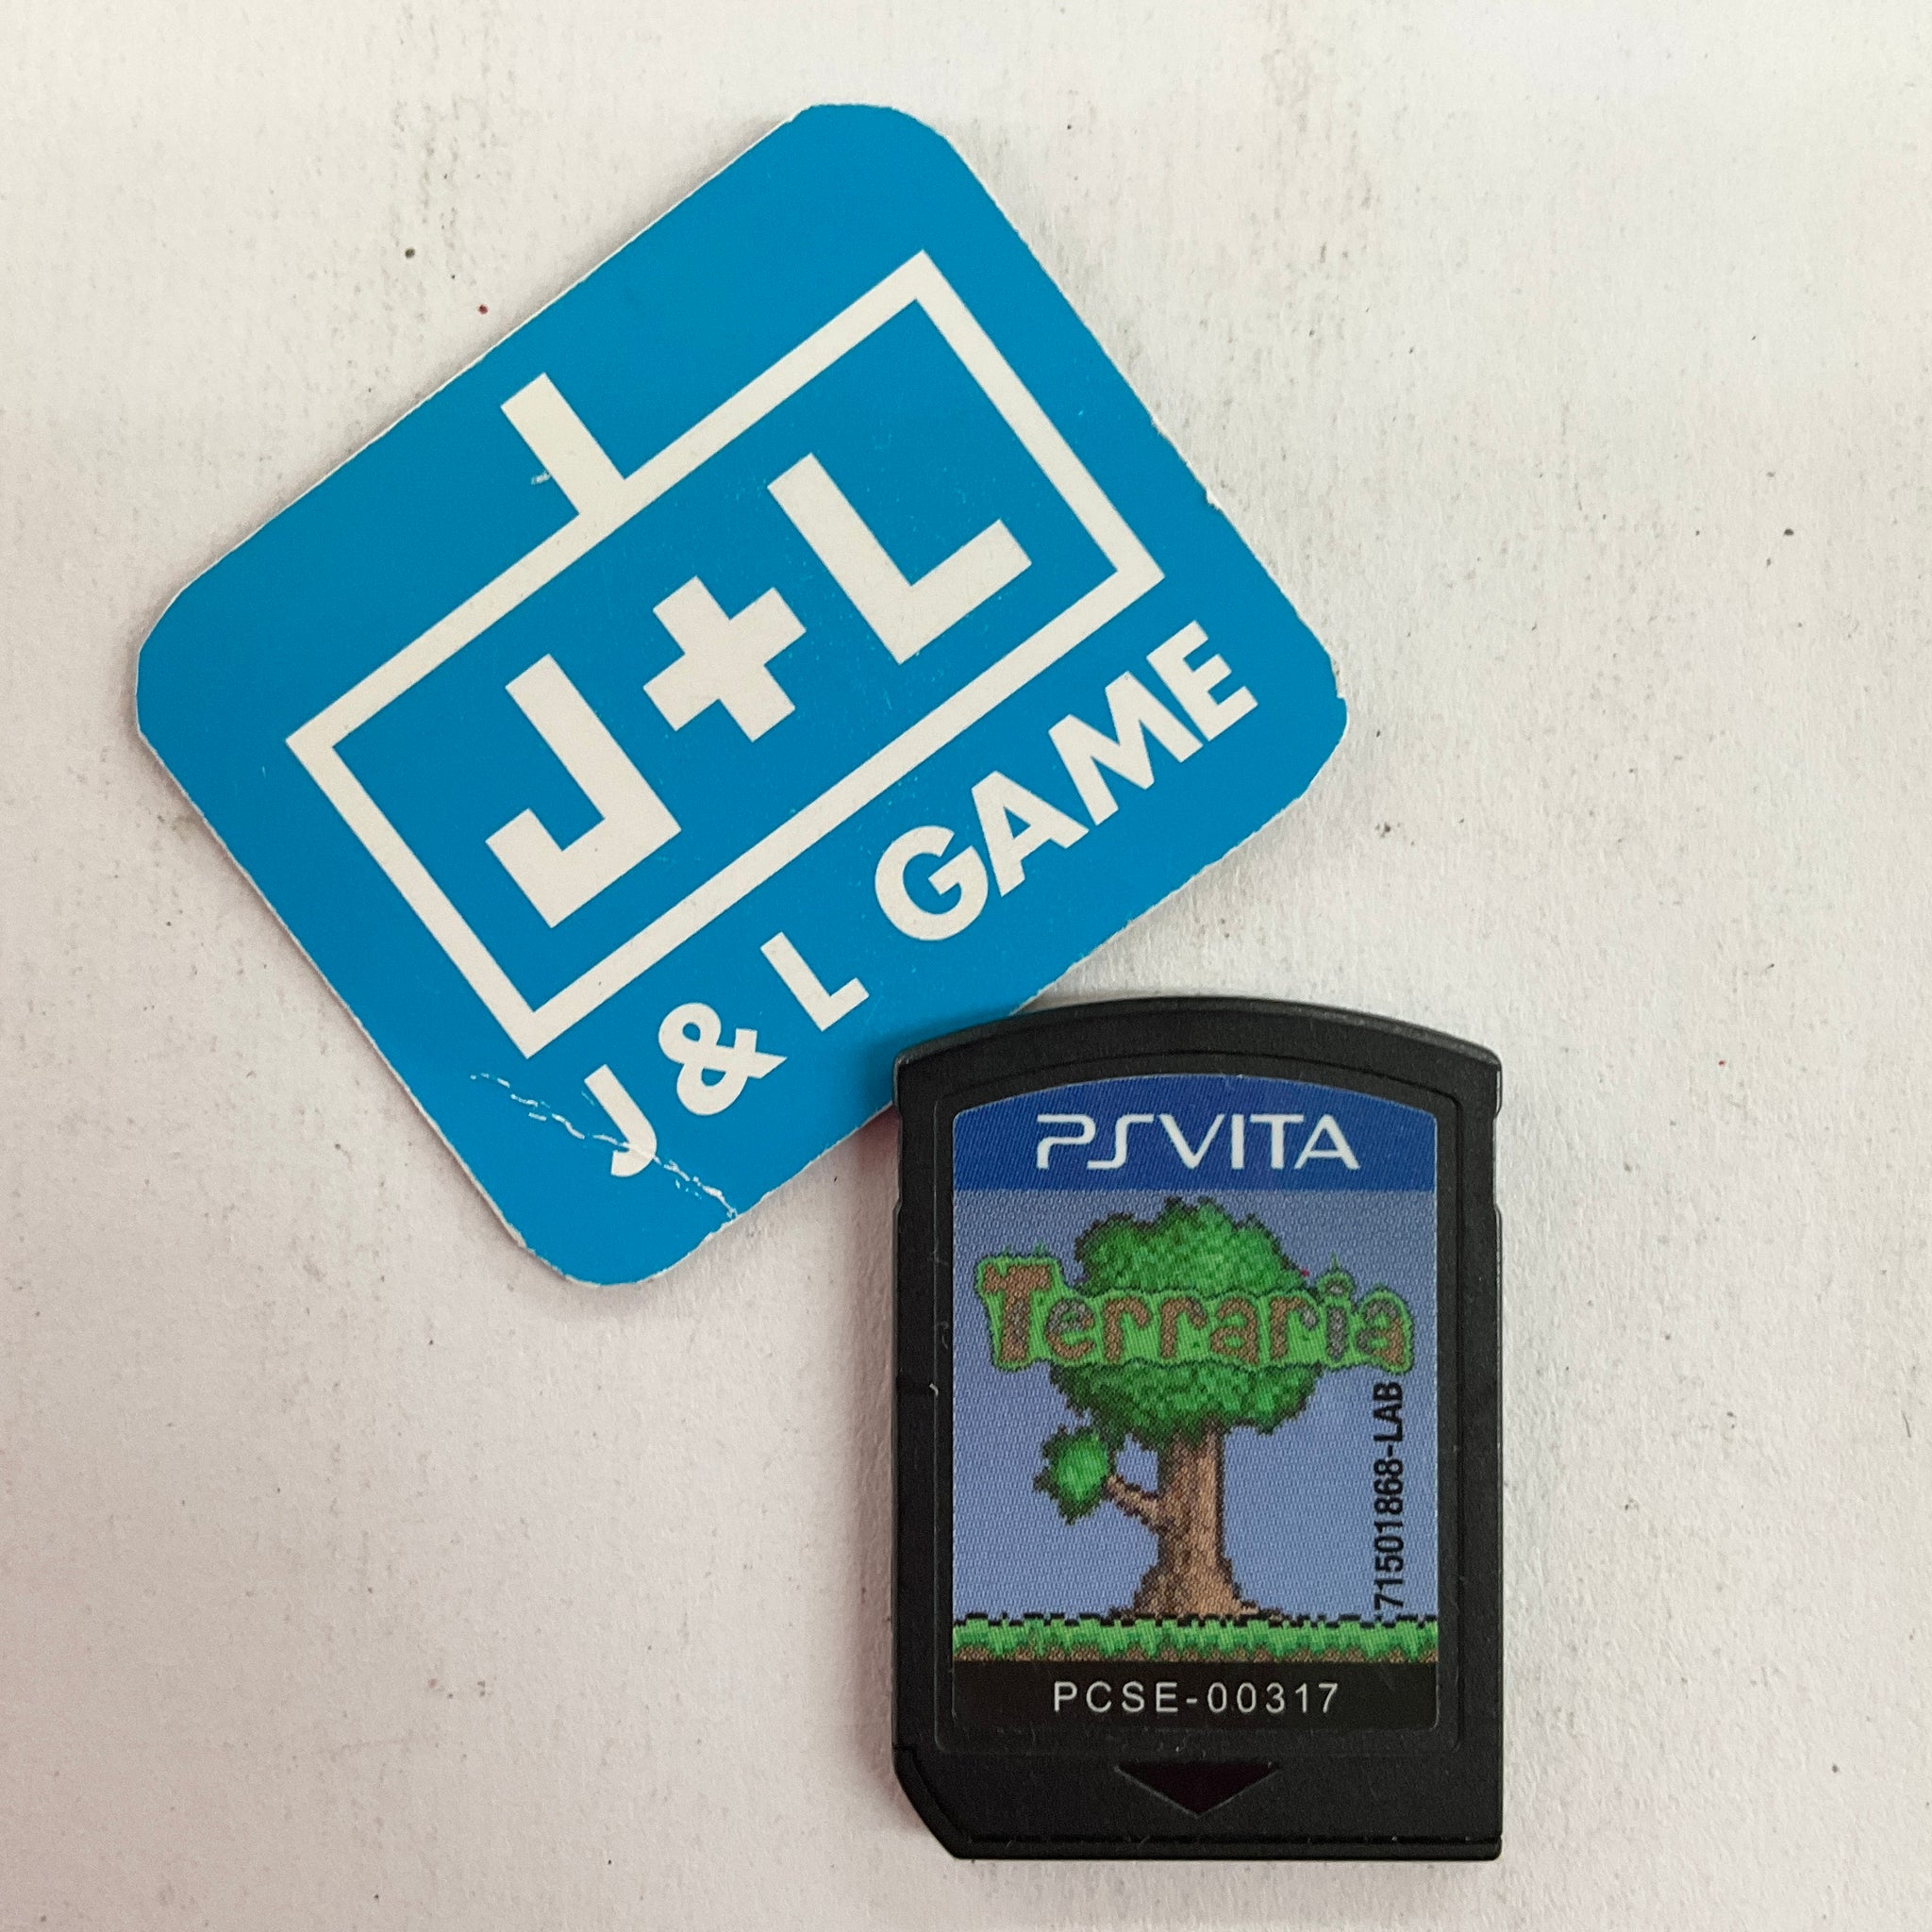 Terraria - (PSV) PS Vita [Pre-Owned] Video Games 505 Games   